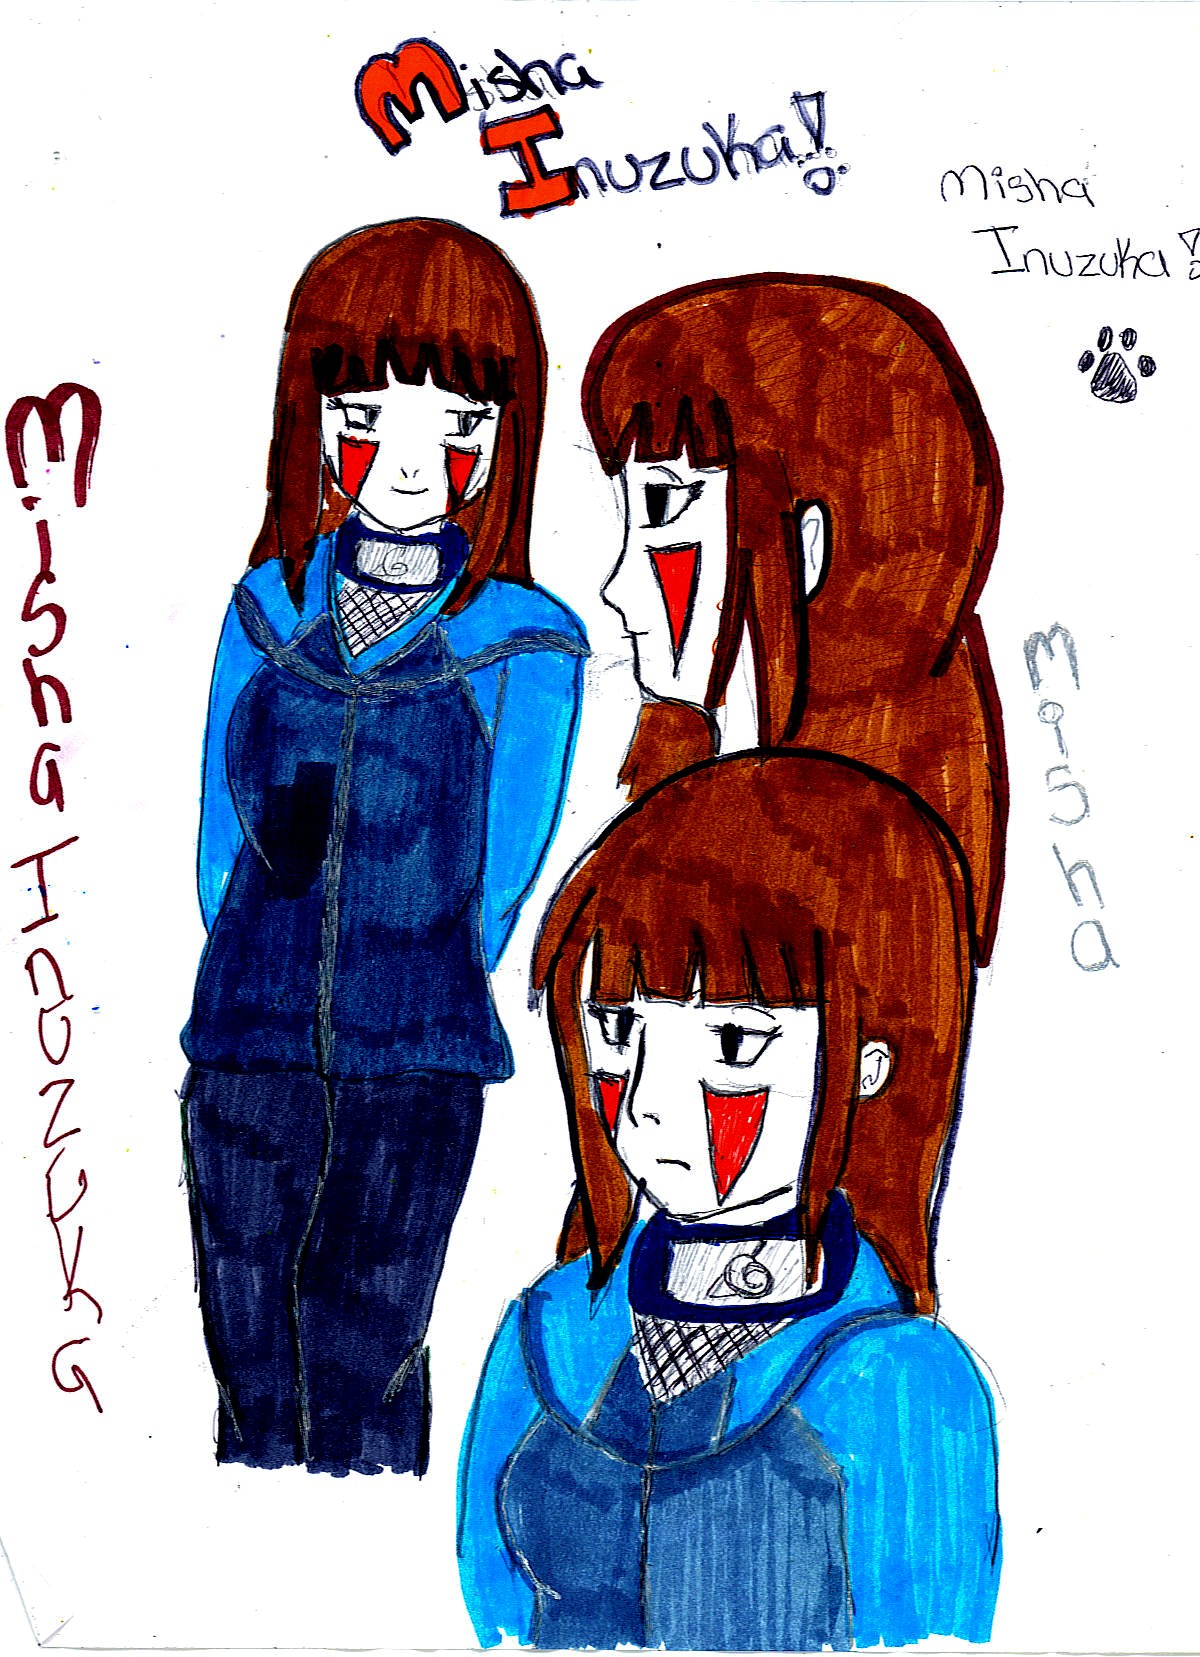 My Naruto Character, Misha by sasukeisemo2006